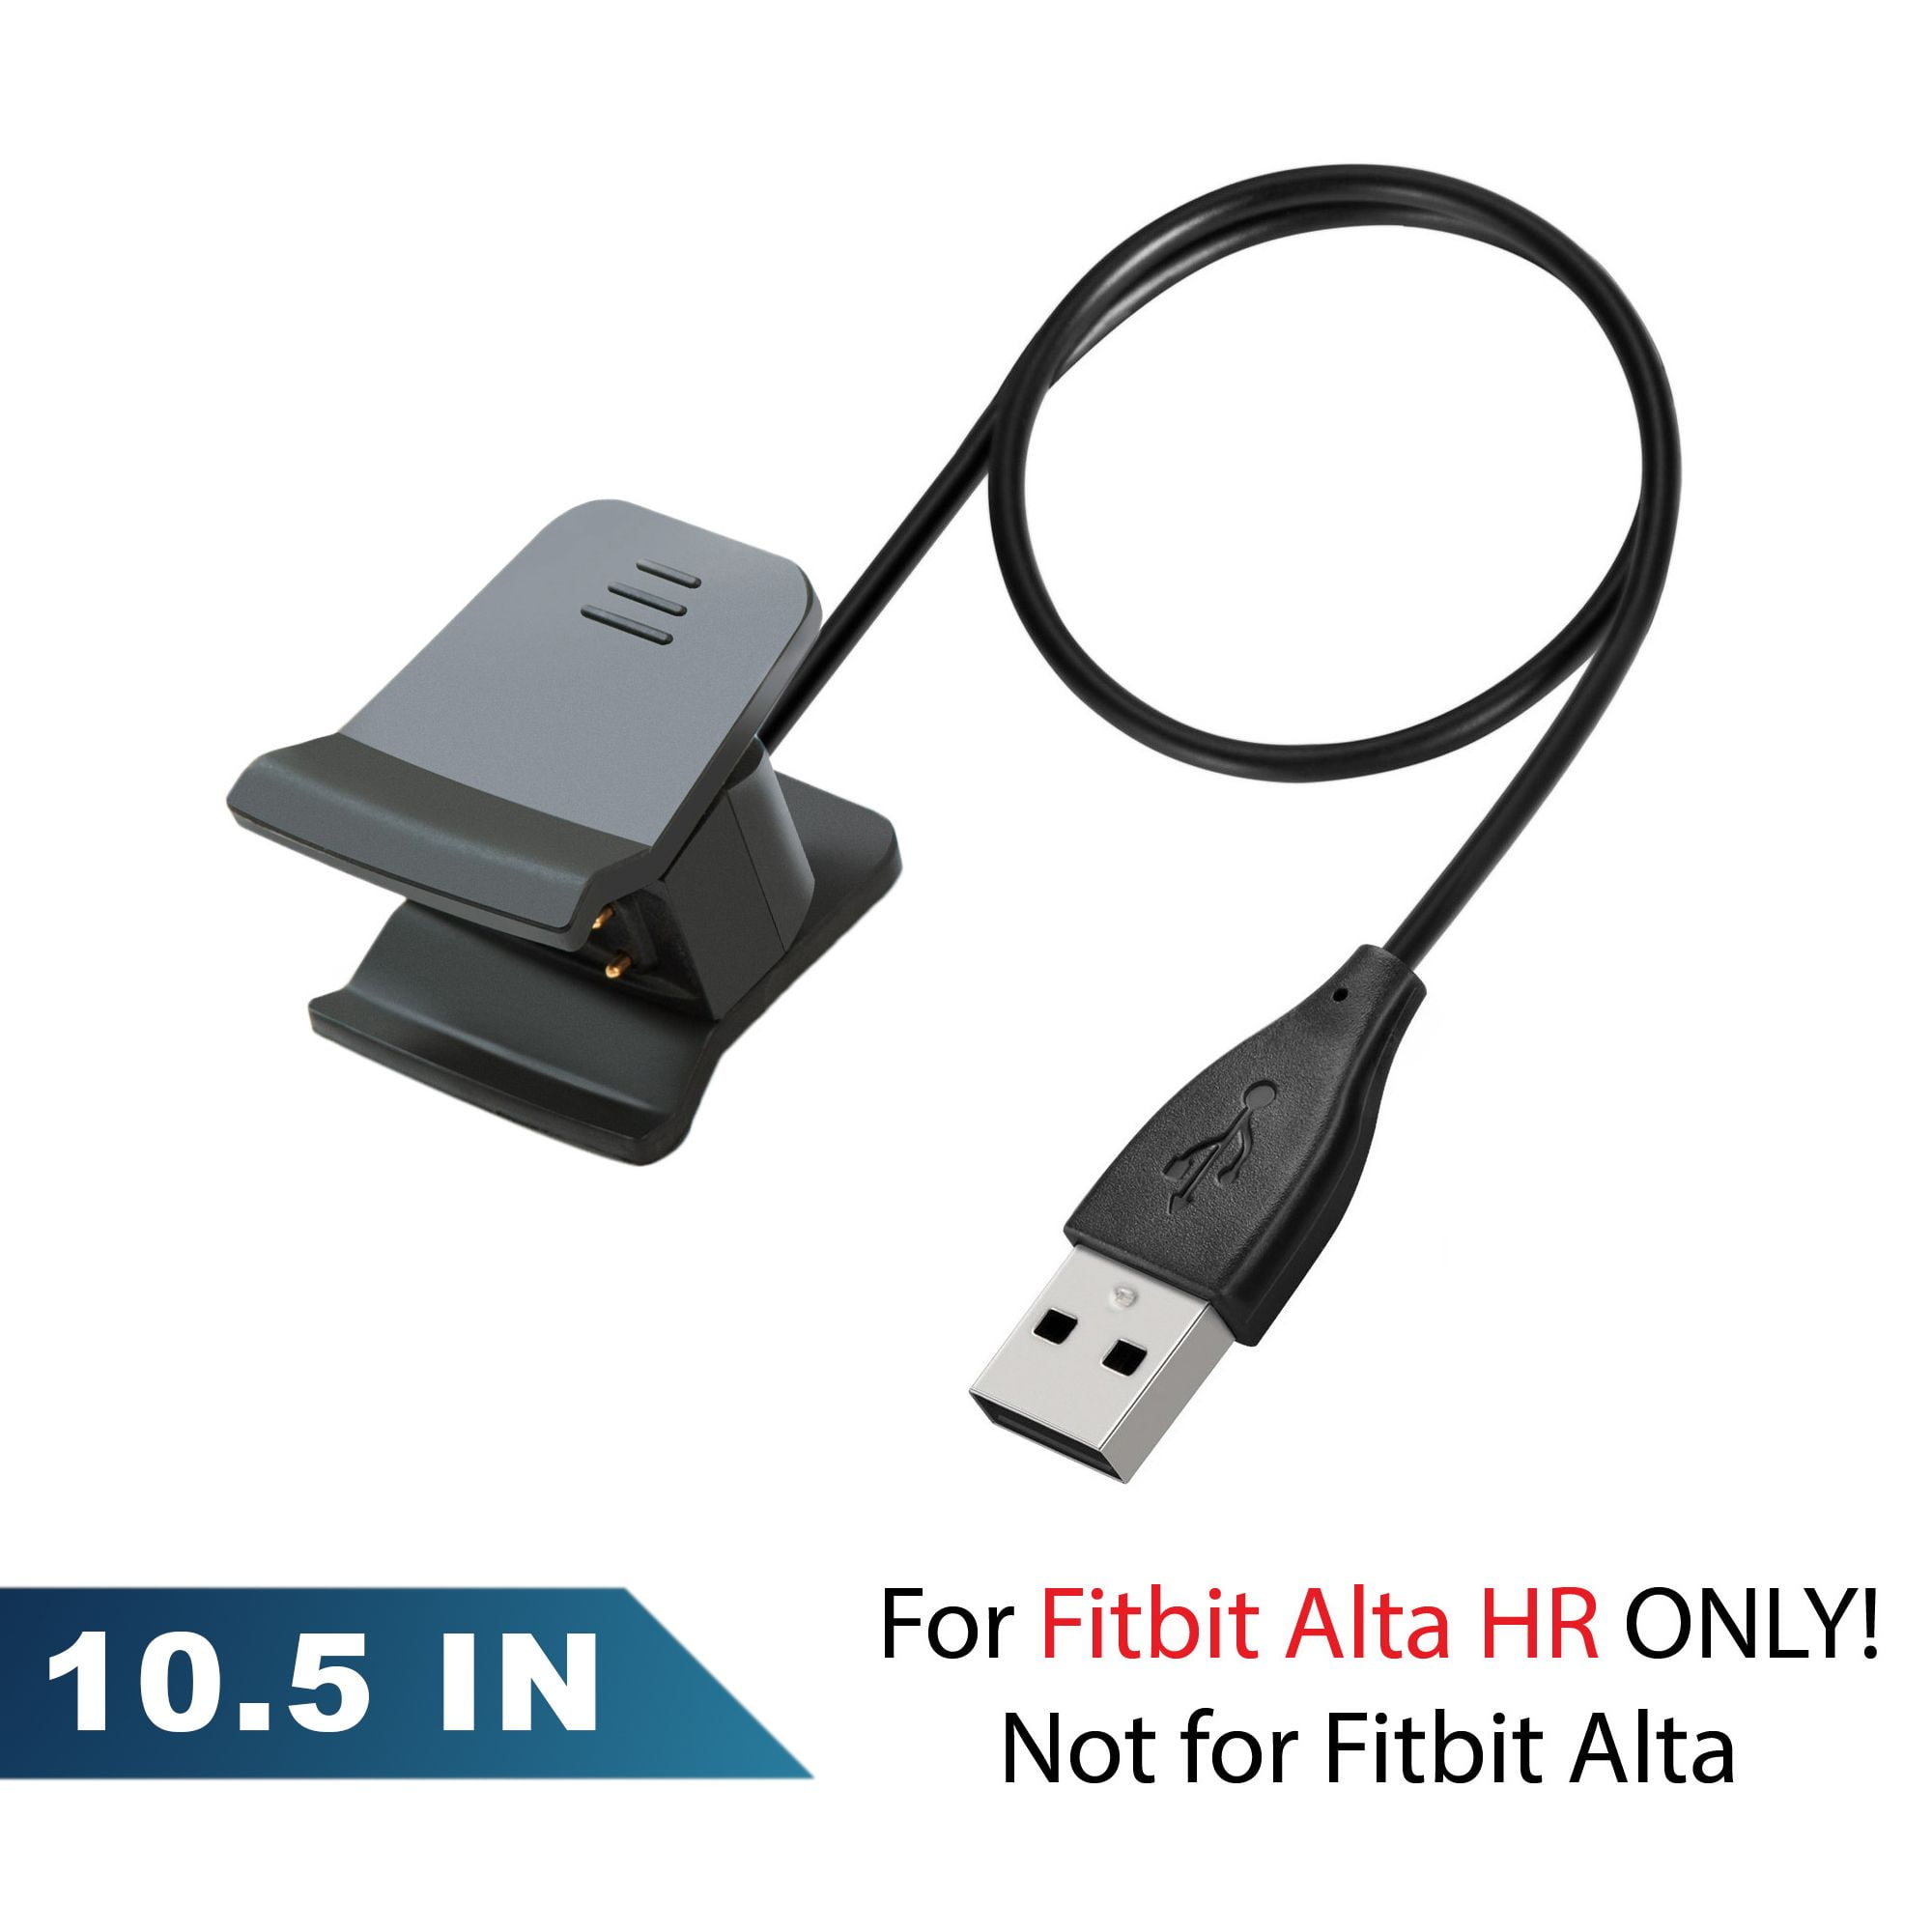 Fitbit Alta HR Charger, Insten 1 Ft USB 